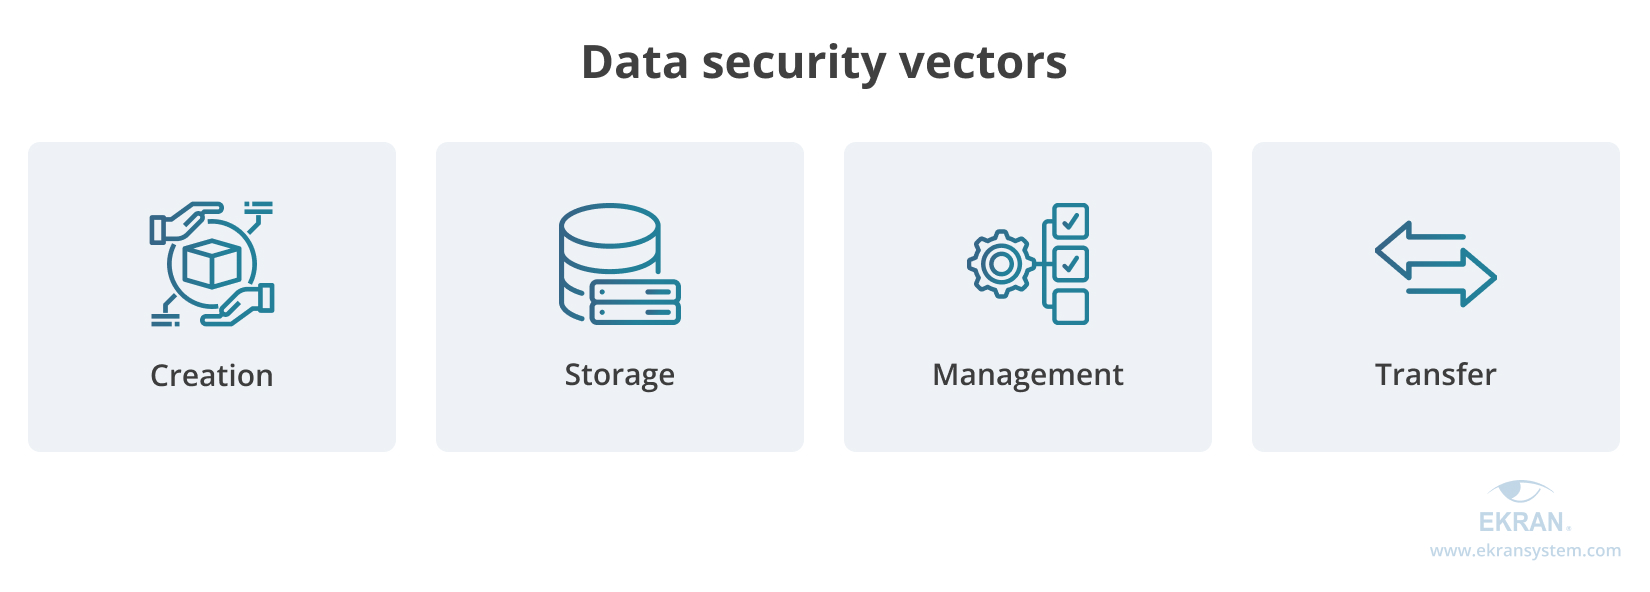 Data security vectors